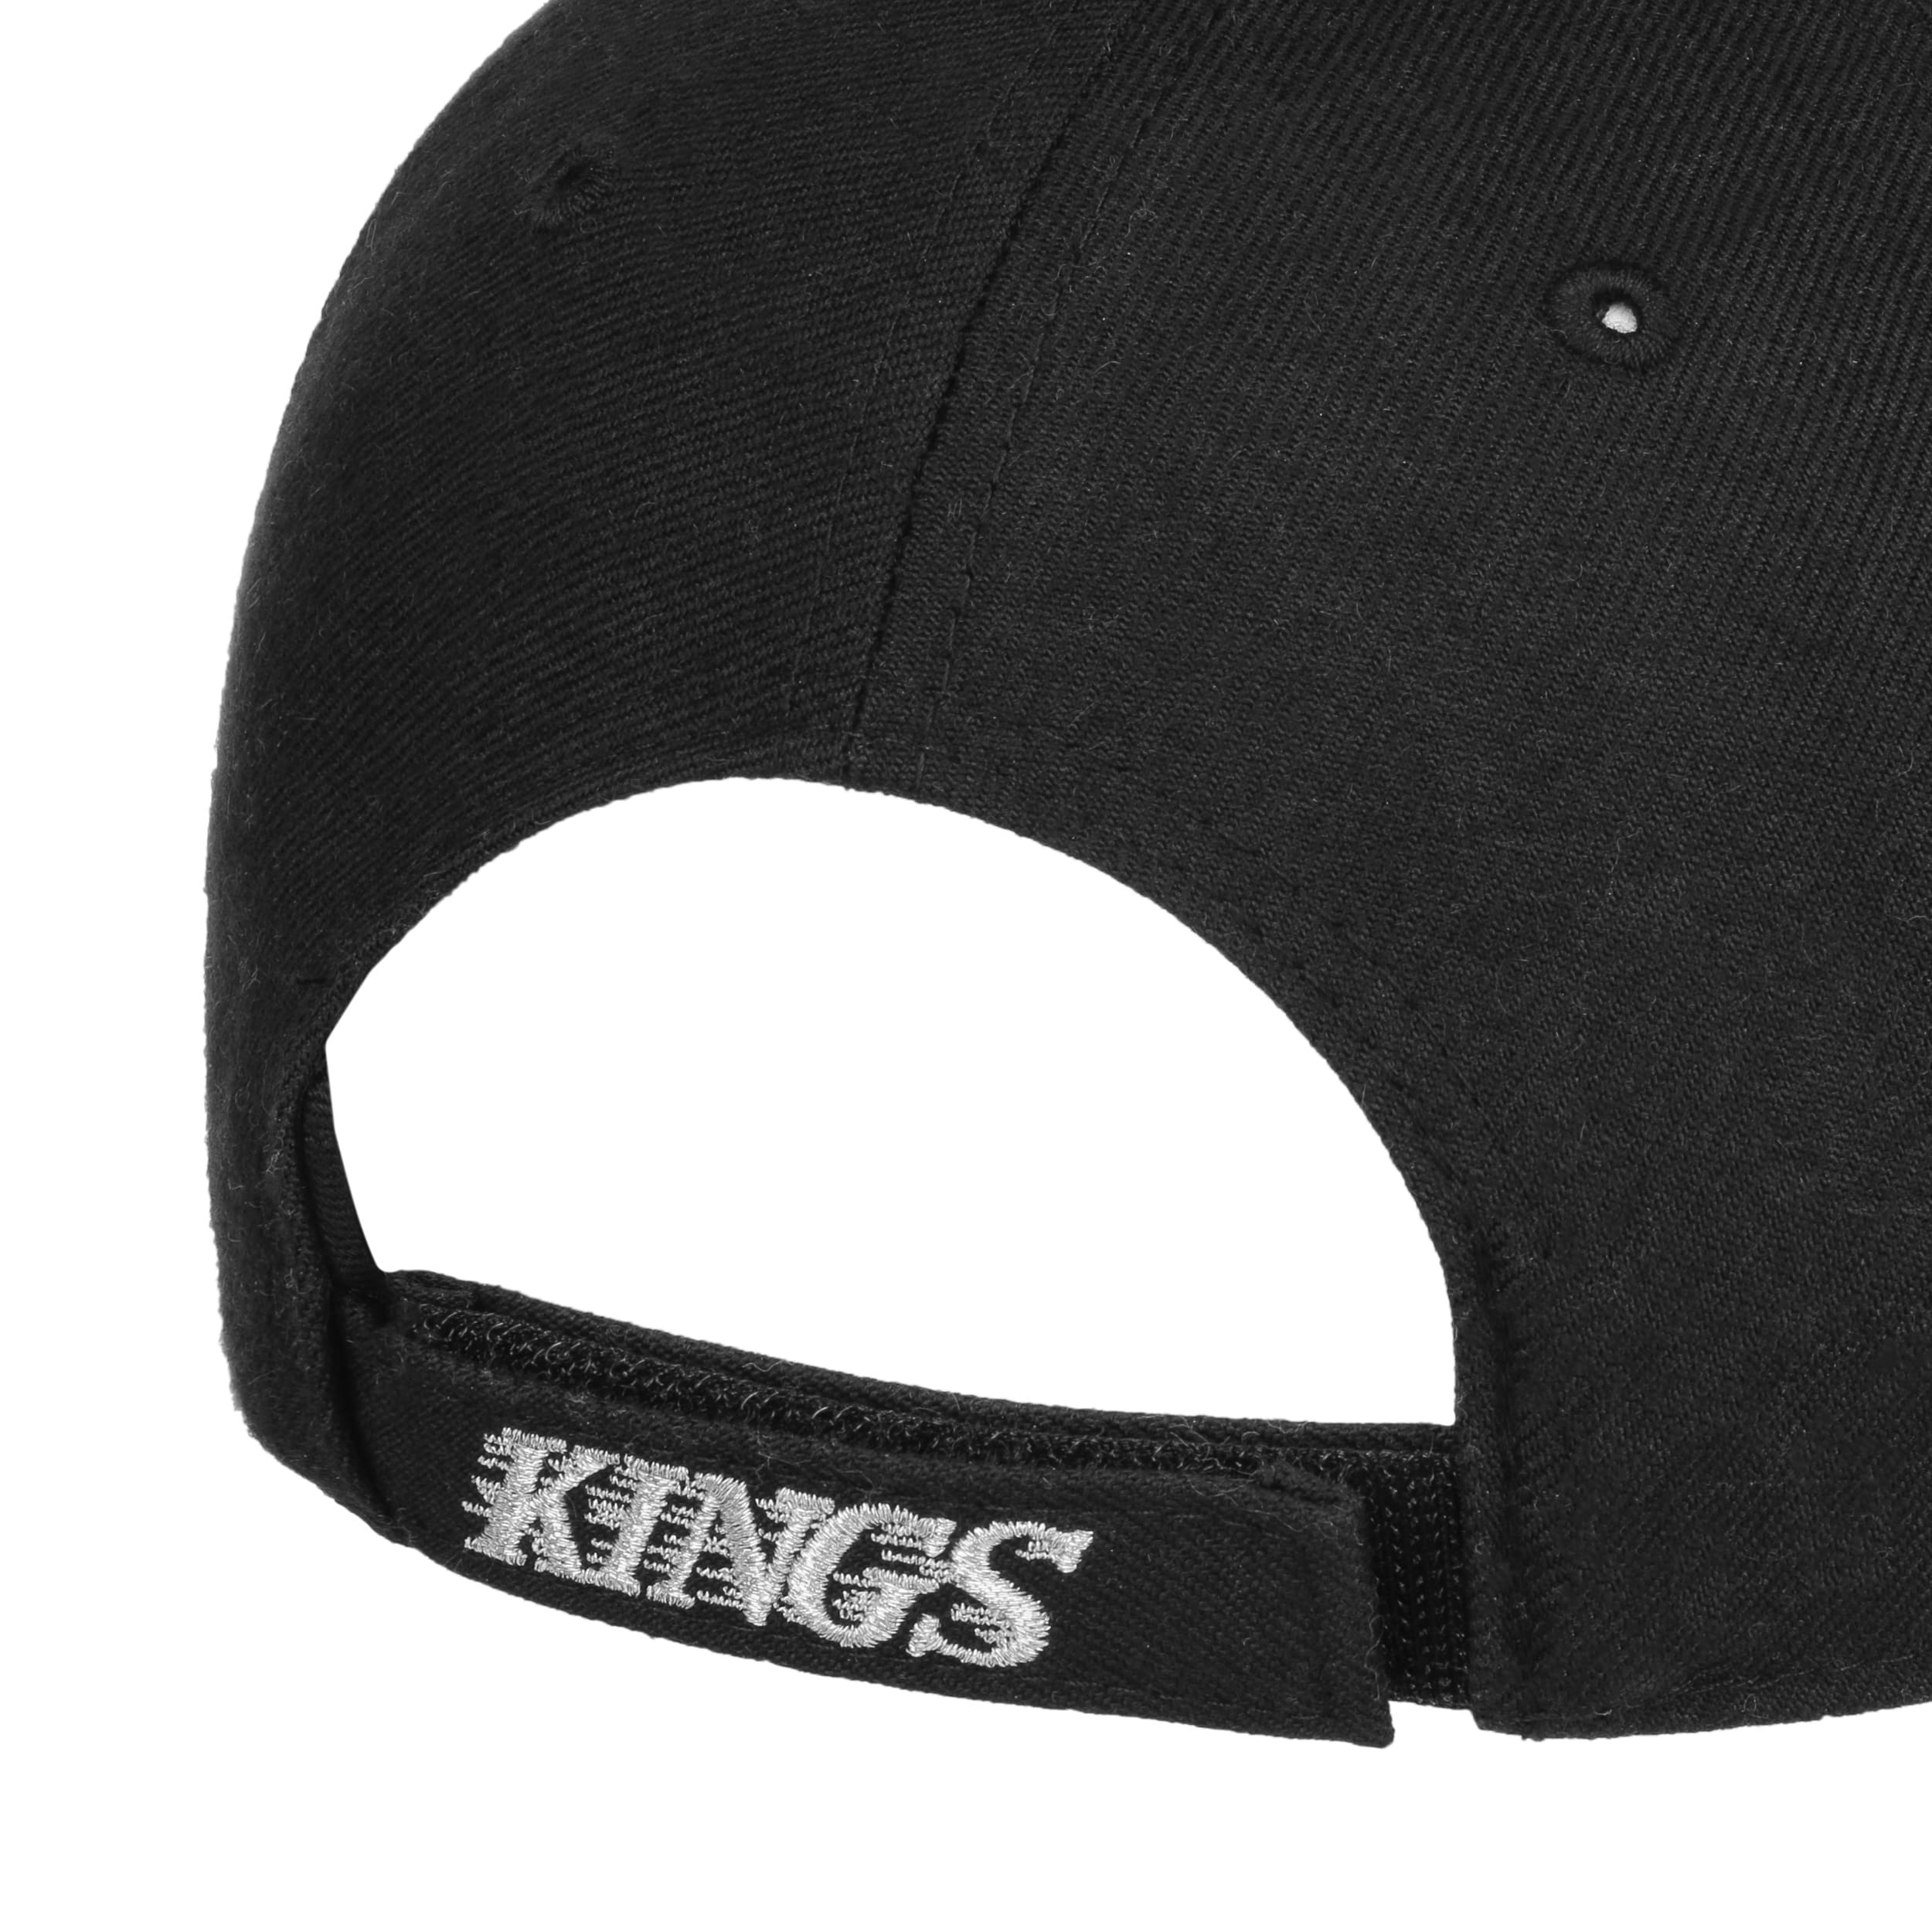 New Era LA Los Angeles Kings Crown Logo Hat Baseball Cap Size 7 1/4 Fitted  NHL